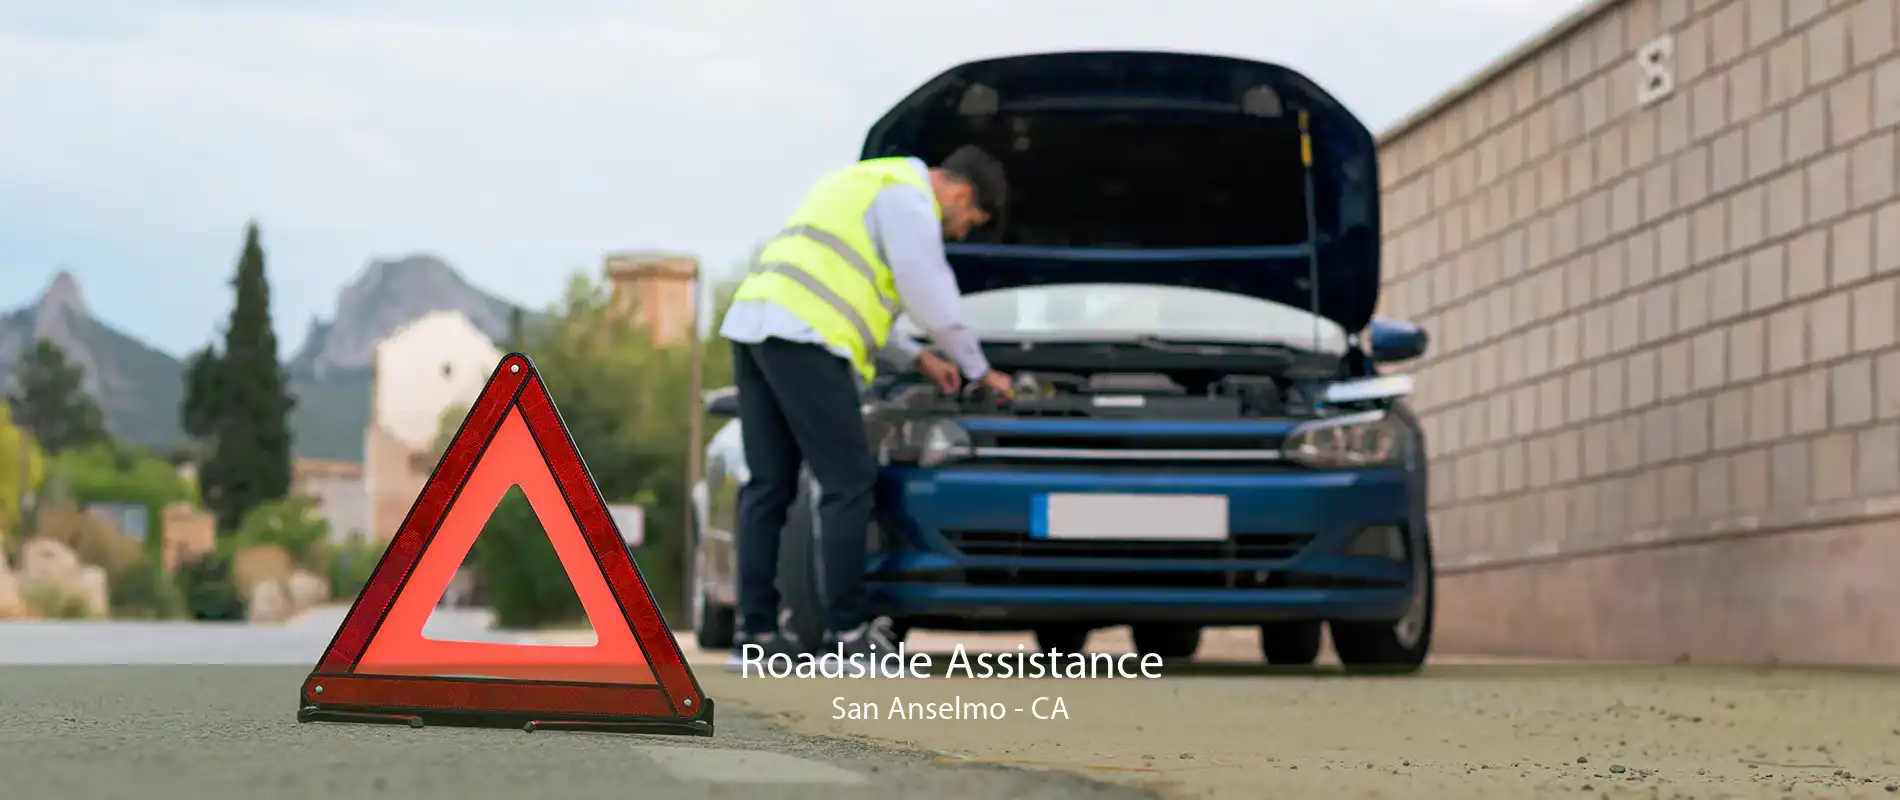 Roadside Assistance San Anselmo - CA